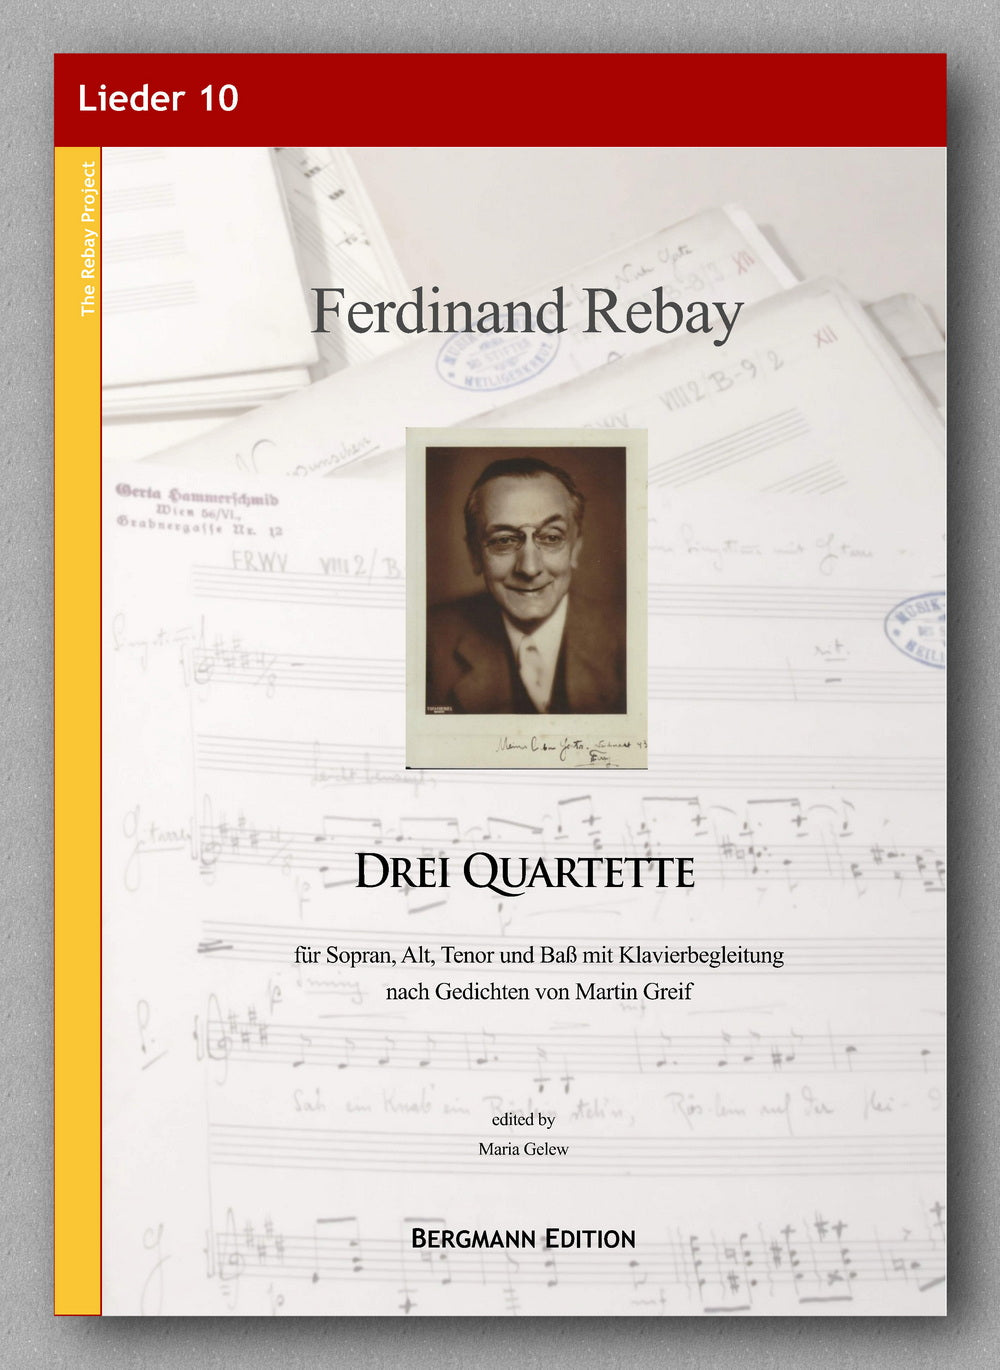 Ferdinand Rebay, Drei Quartette - preview of the cover